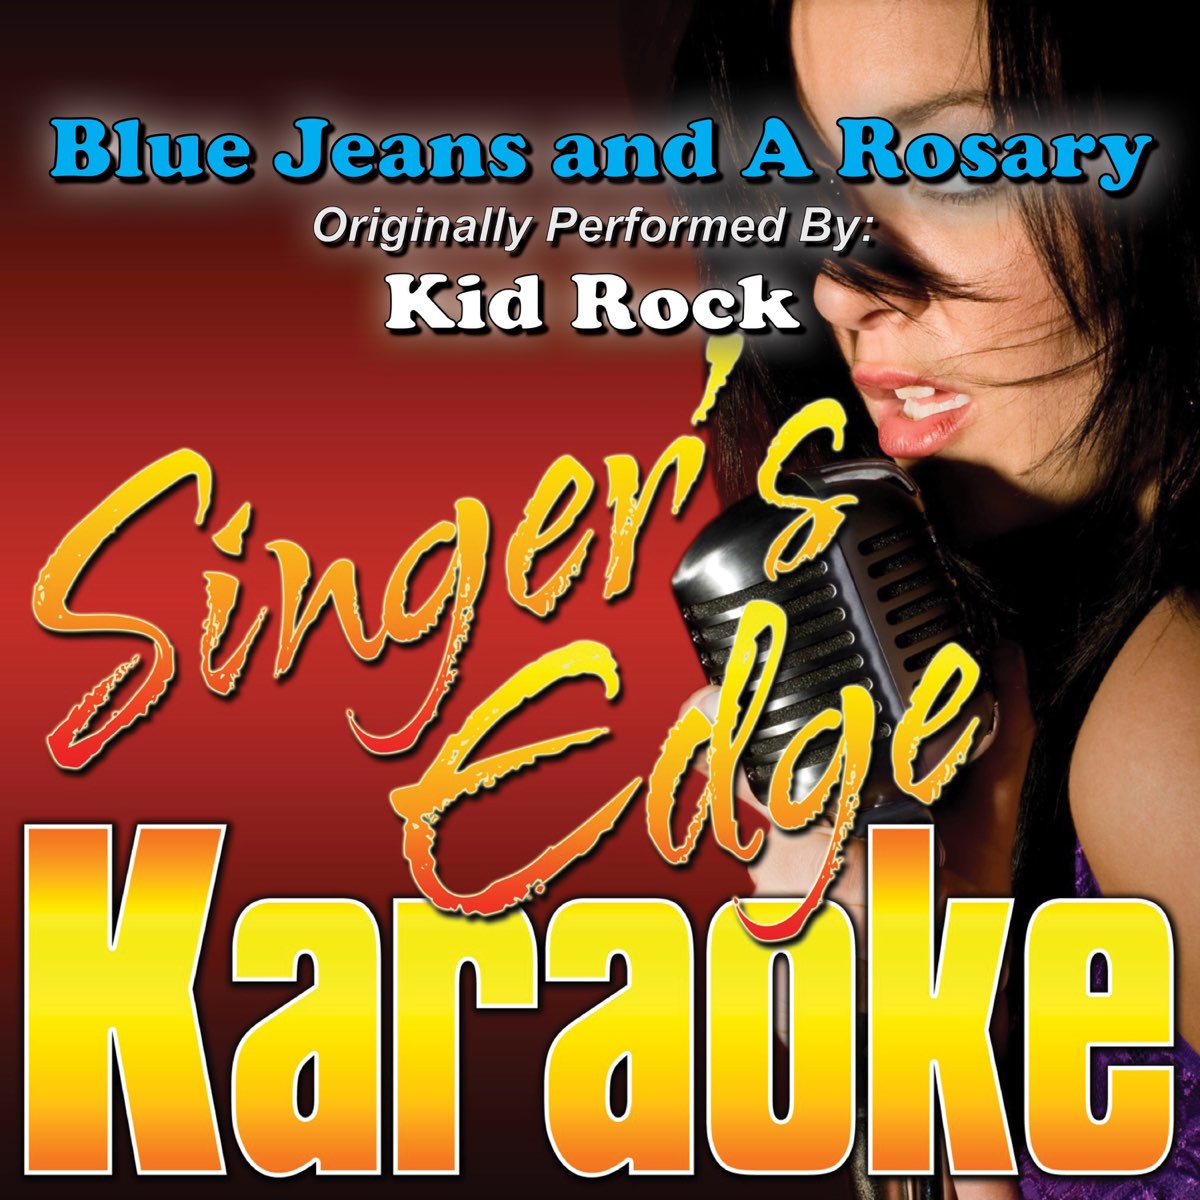 Blue Jeans and a Rosary (Originally Performed By Kid Rock) [Karaoke  Version] - Single by Singer's Edge Karaoke on Apple Music